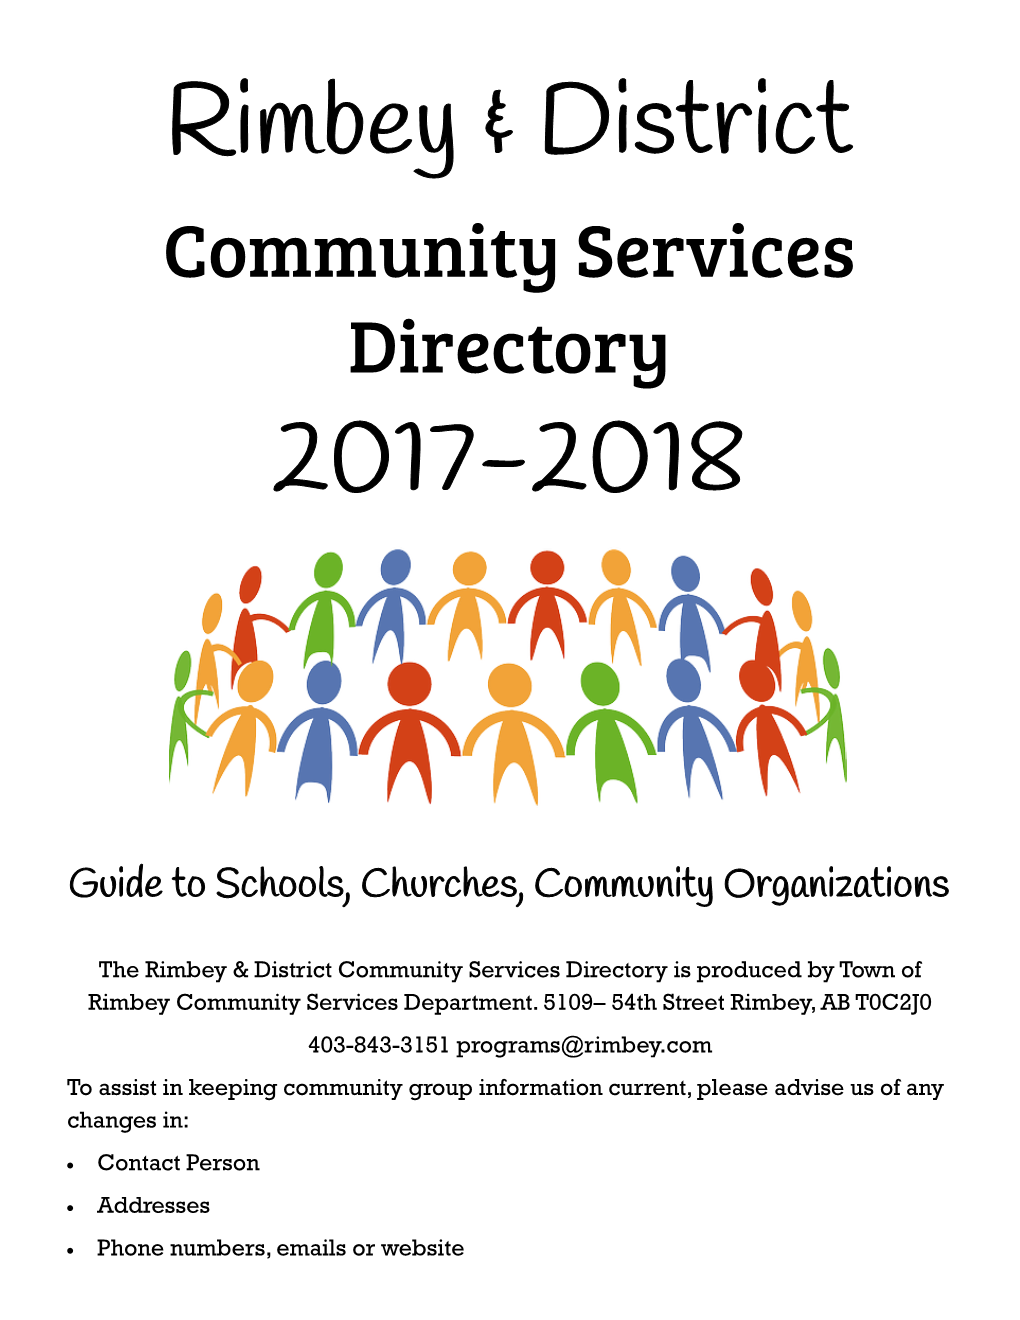 Rimbey & District Community Services Directory 2017